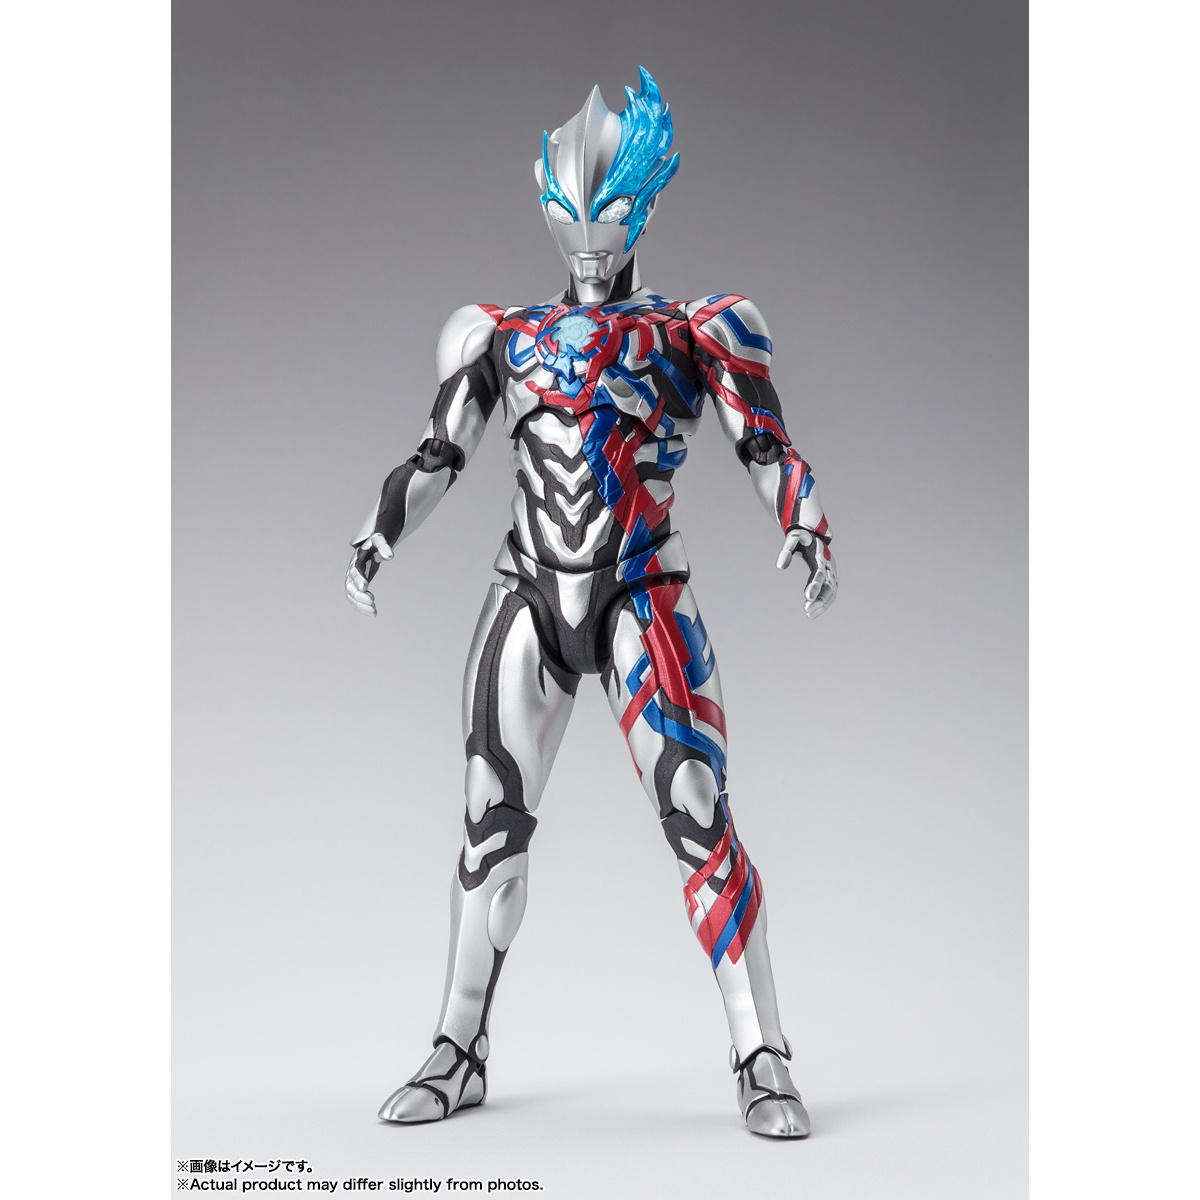 Ultraman S.H.Figuarts Figure "Ultraman Blazer"-Tamashii-Ace Cards & Collectibles